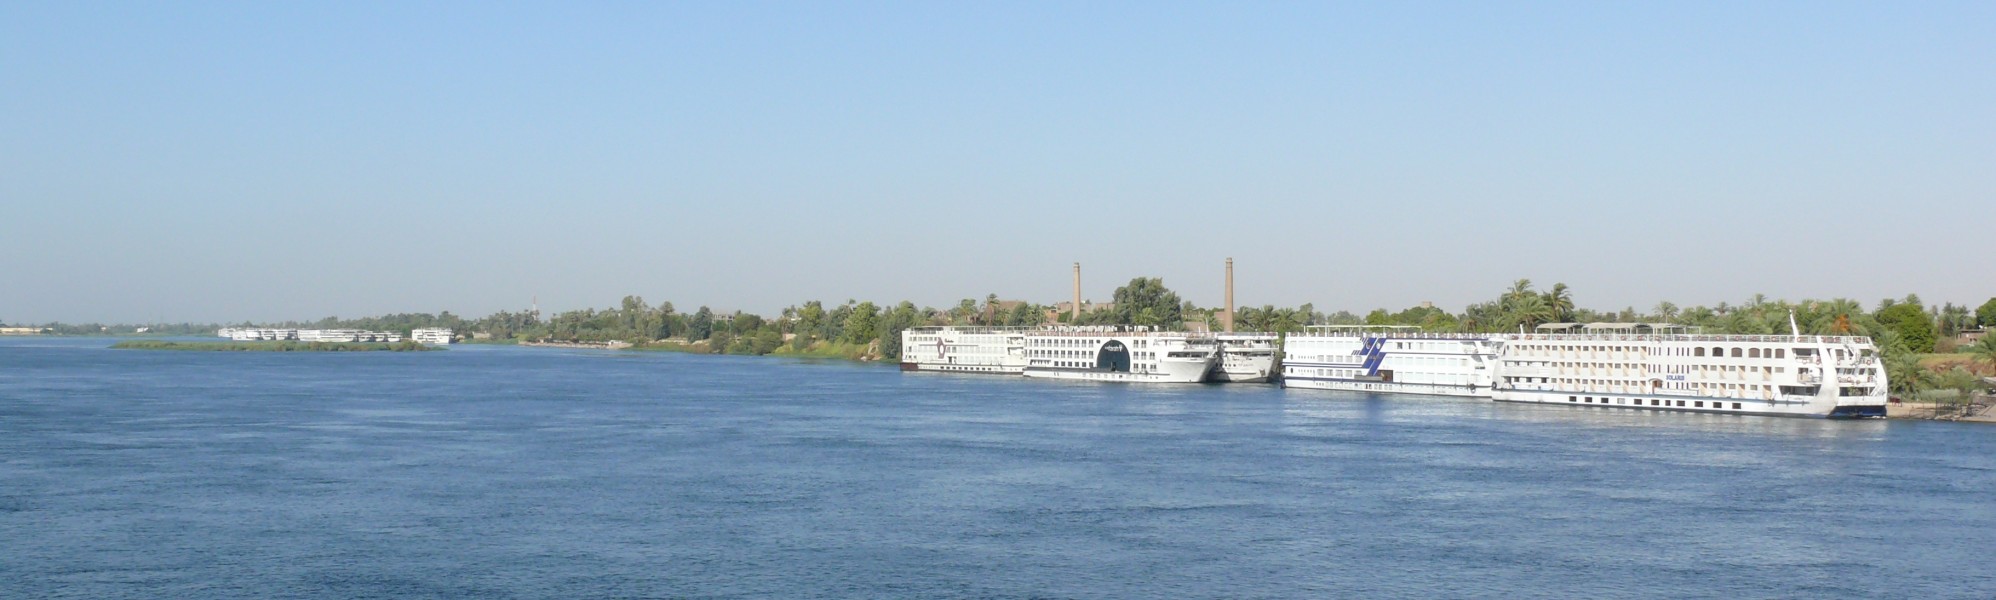 Nile cruise ships in Luxor 01